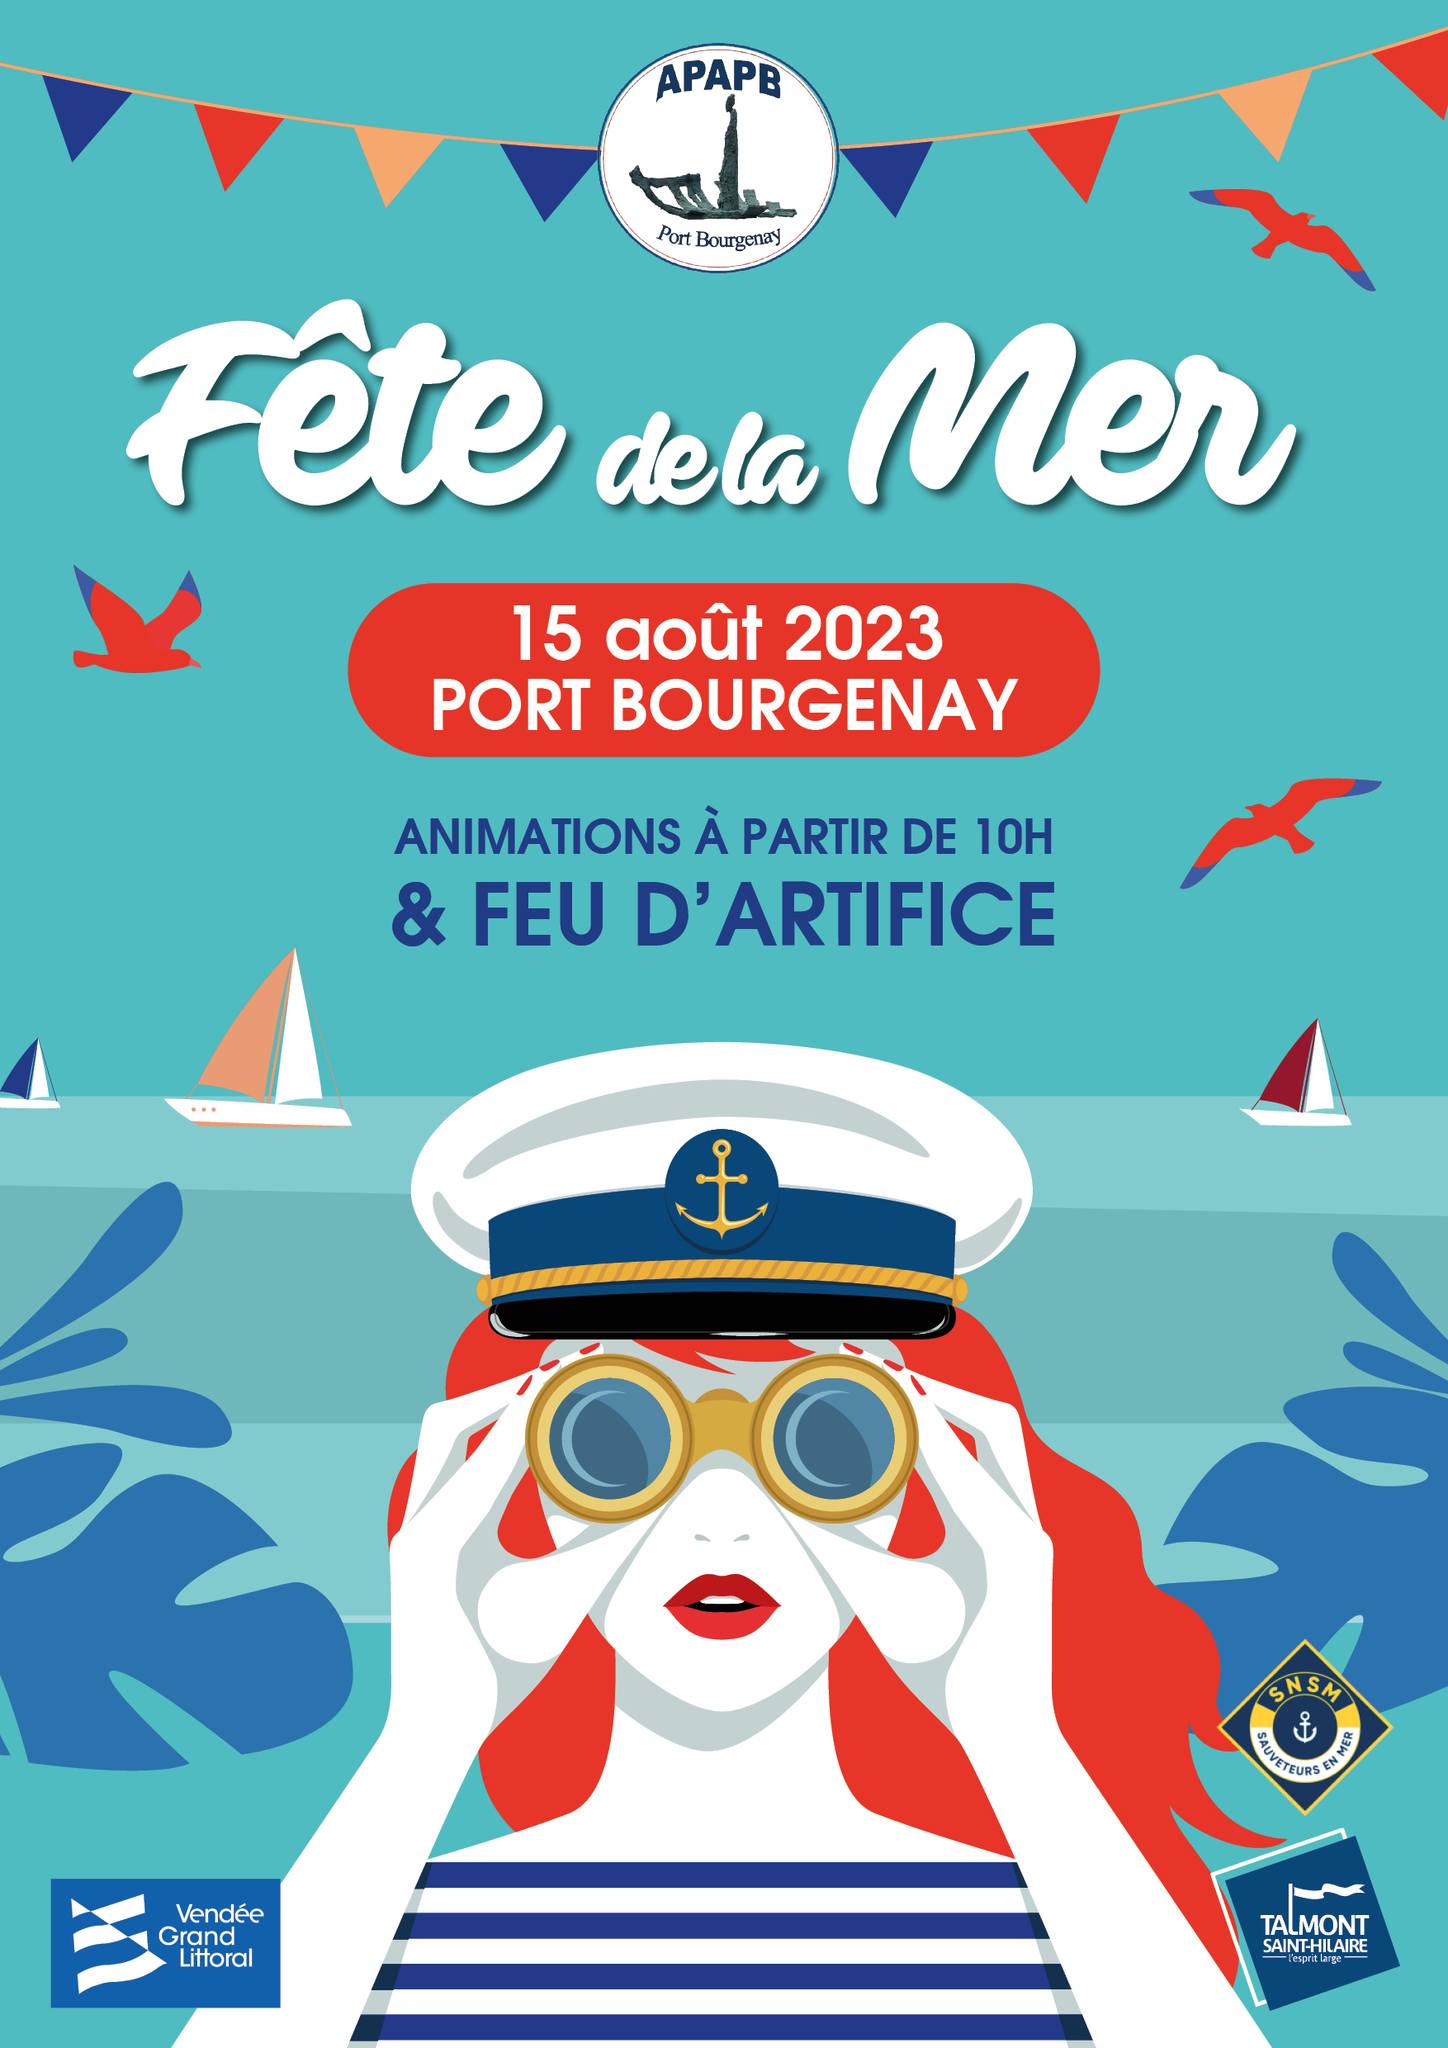 La Fête de la Mer ce mardi 15 août à Port Bourgenay 